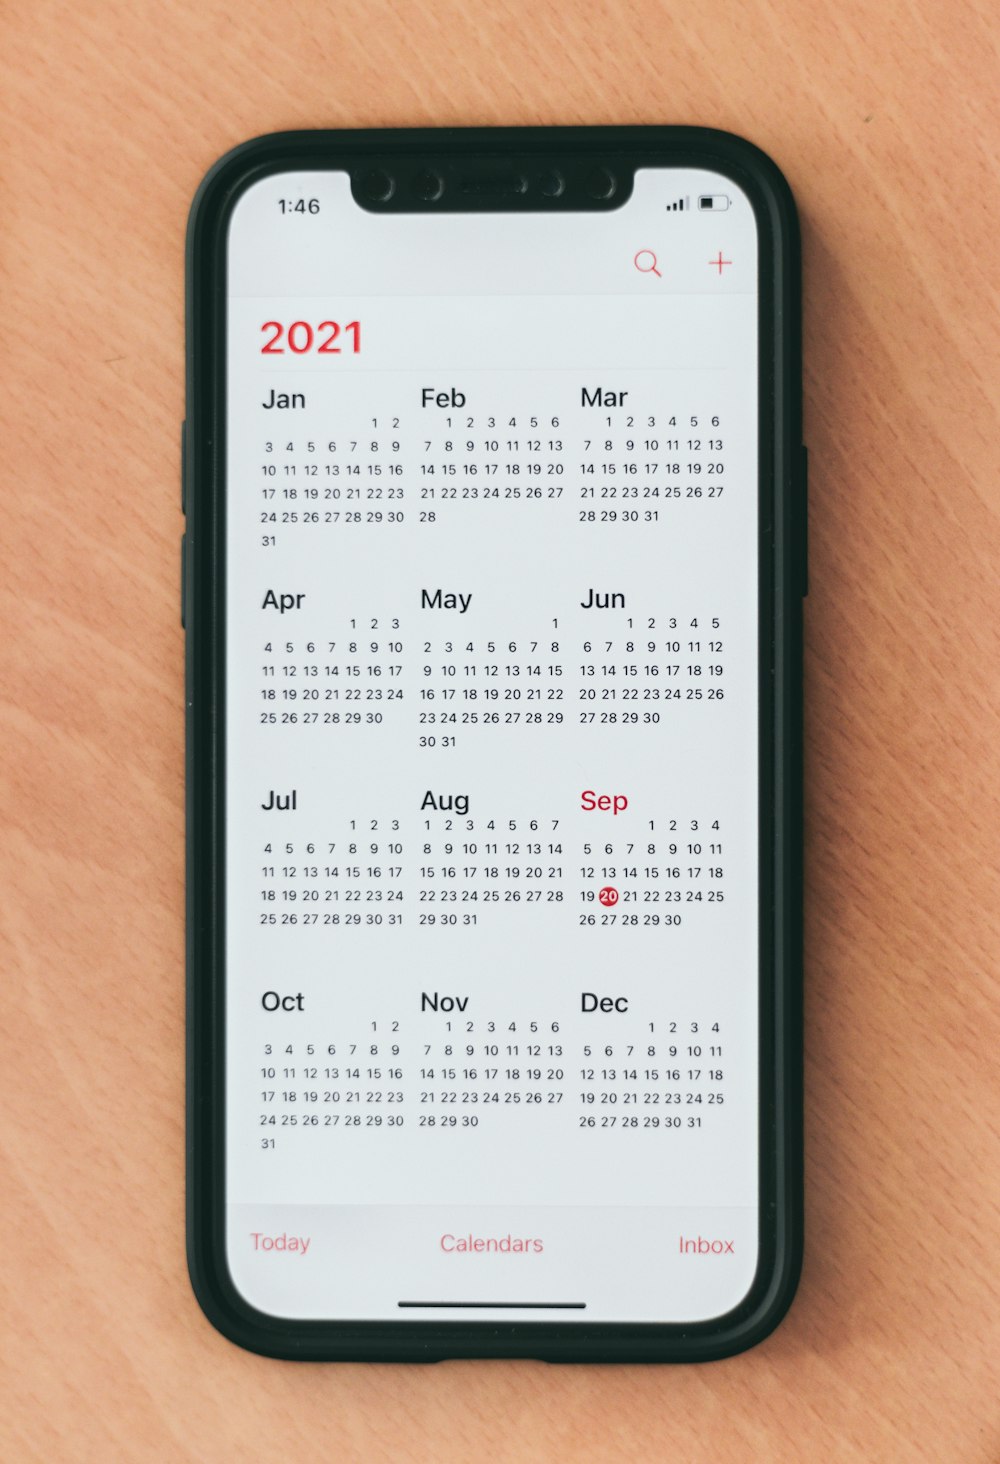 Phone Calendar Pictures | Download Free Images on Unsplash